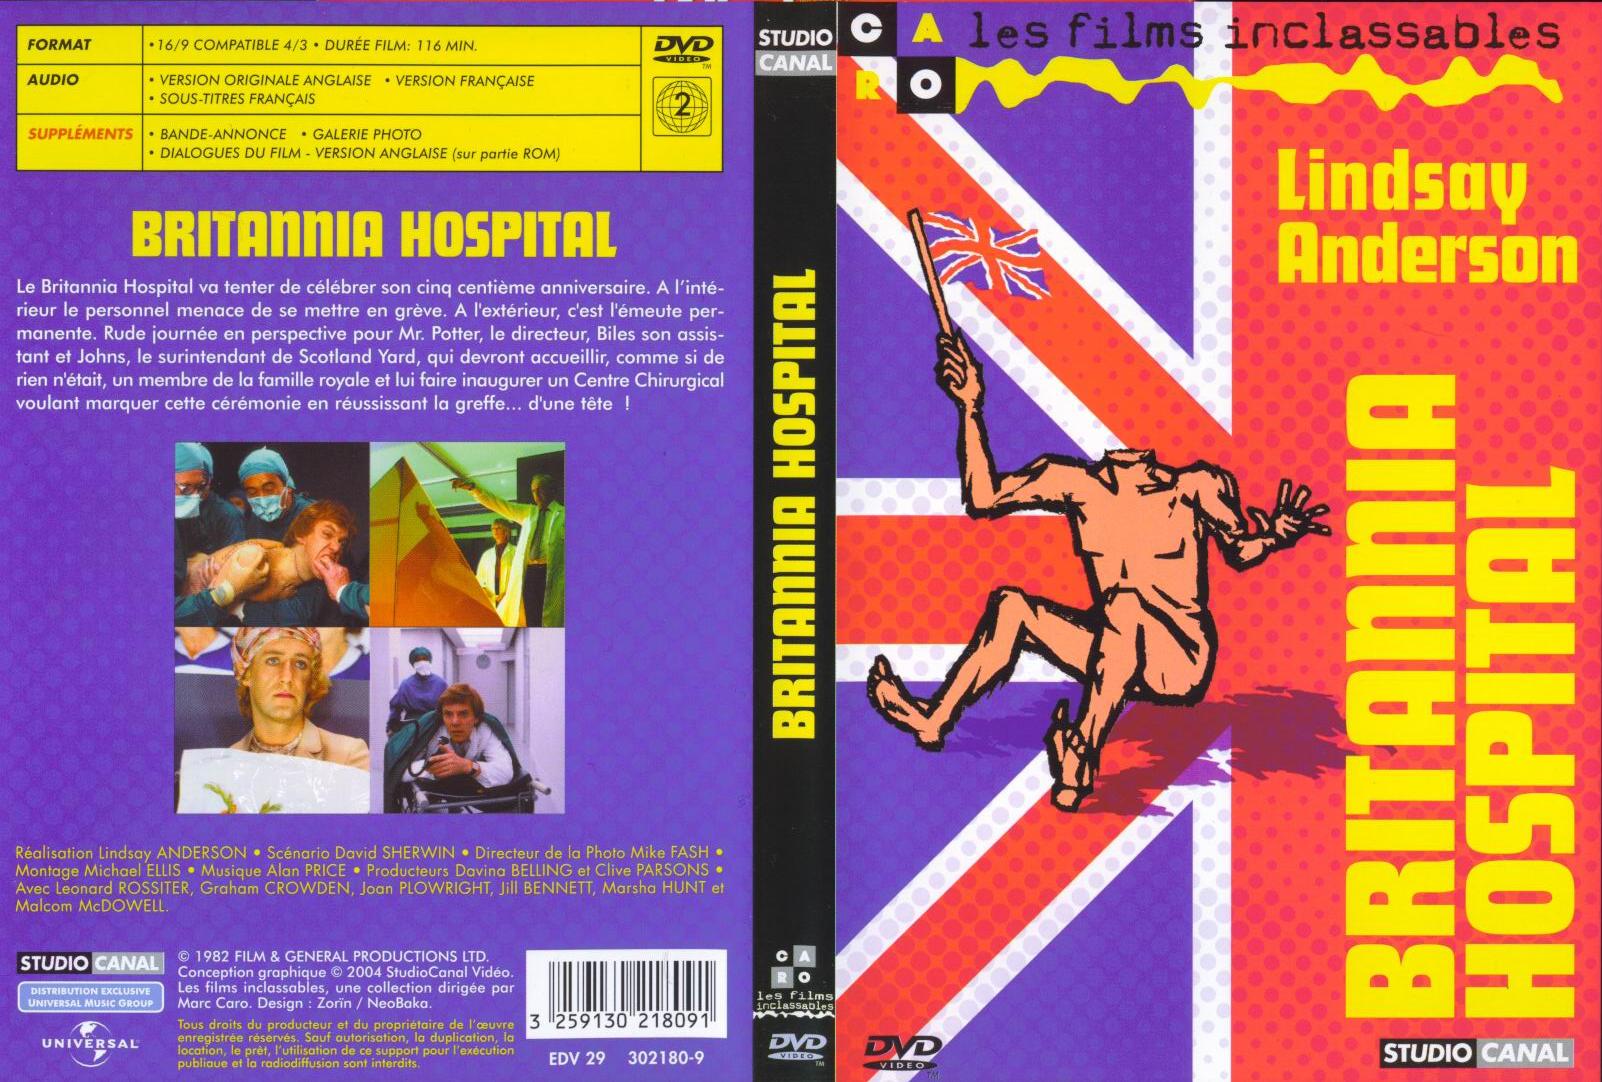 Jaquette DVD Britannia hospital